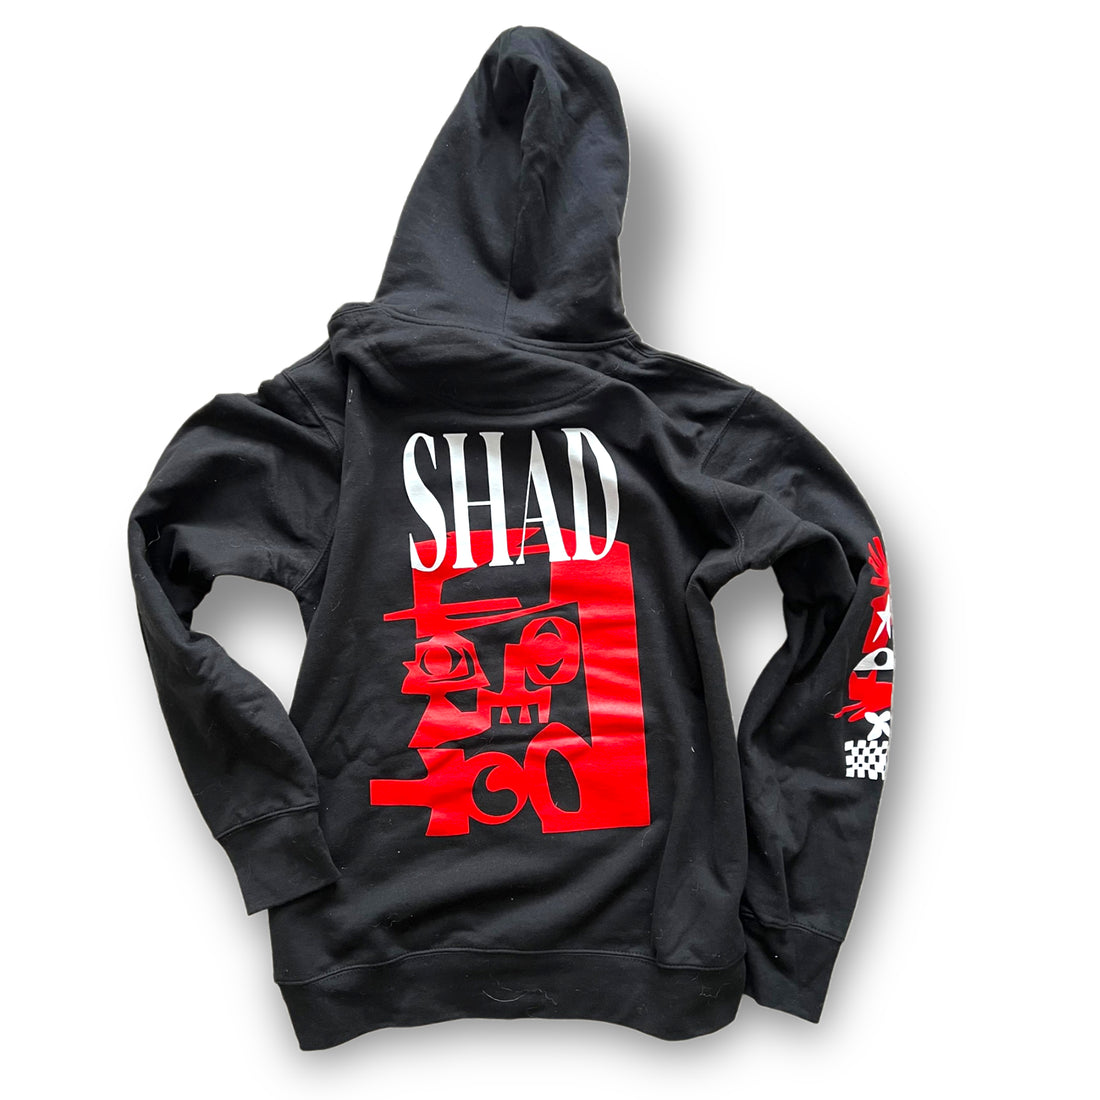 SHAD - Tao - Black Hoodie